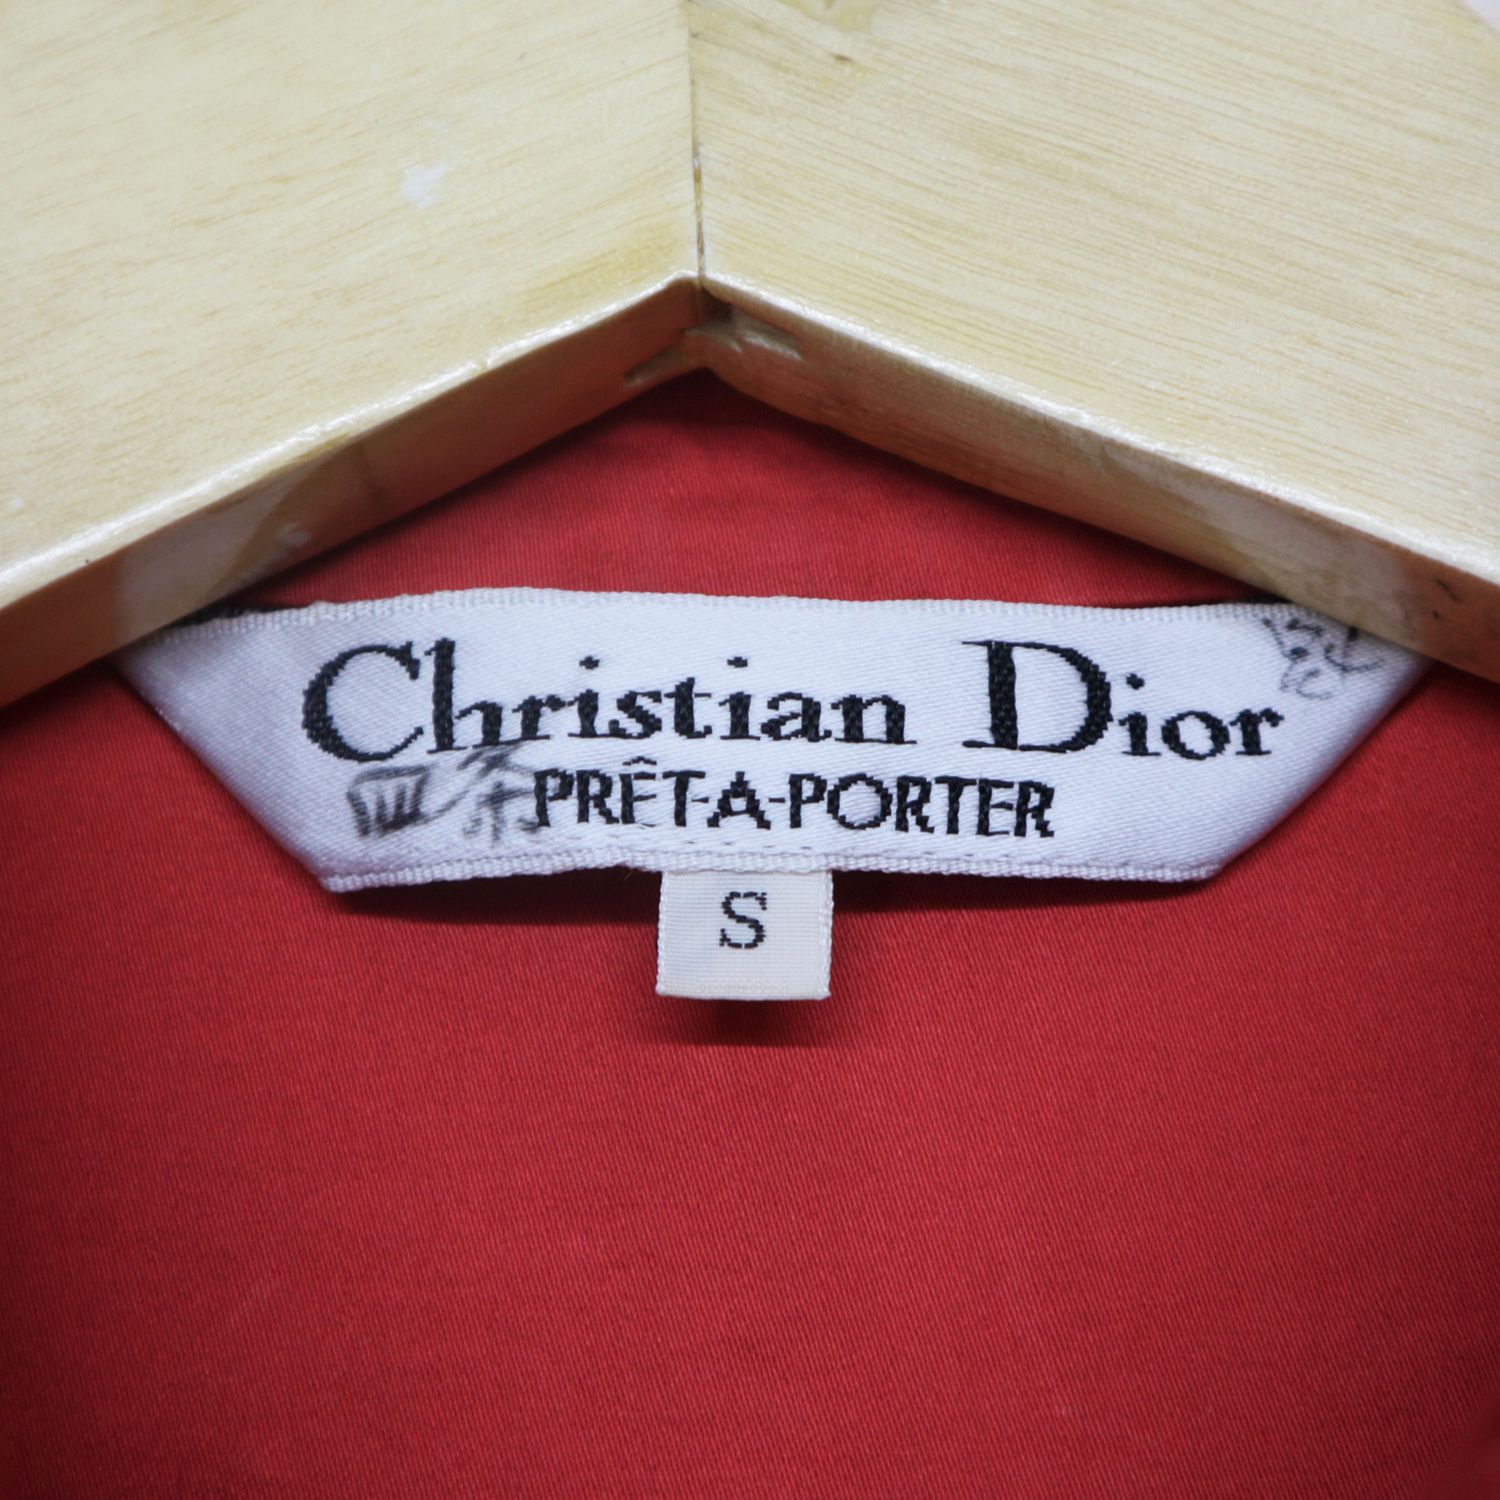 CHRISTIAN DIOR Pret-A-Porter Botton Ups Shirt - 6